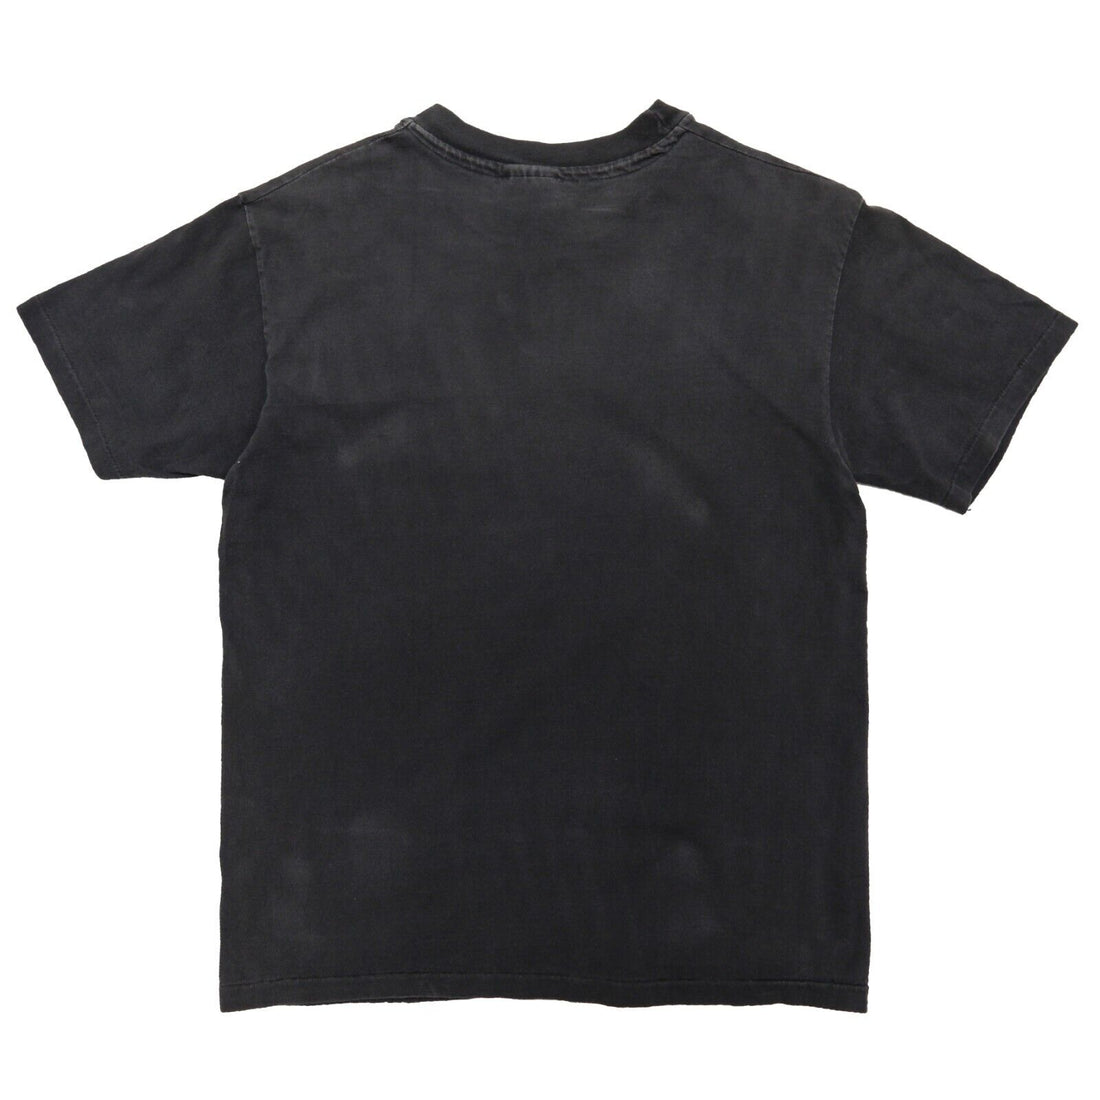 Vintage Colorado Rockies T-Shirt Size Medium Black 1995 90s MLB